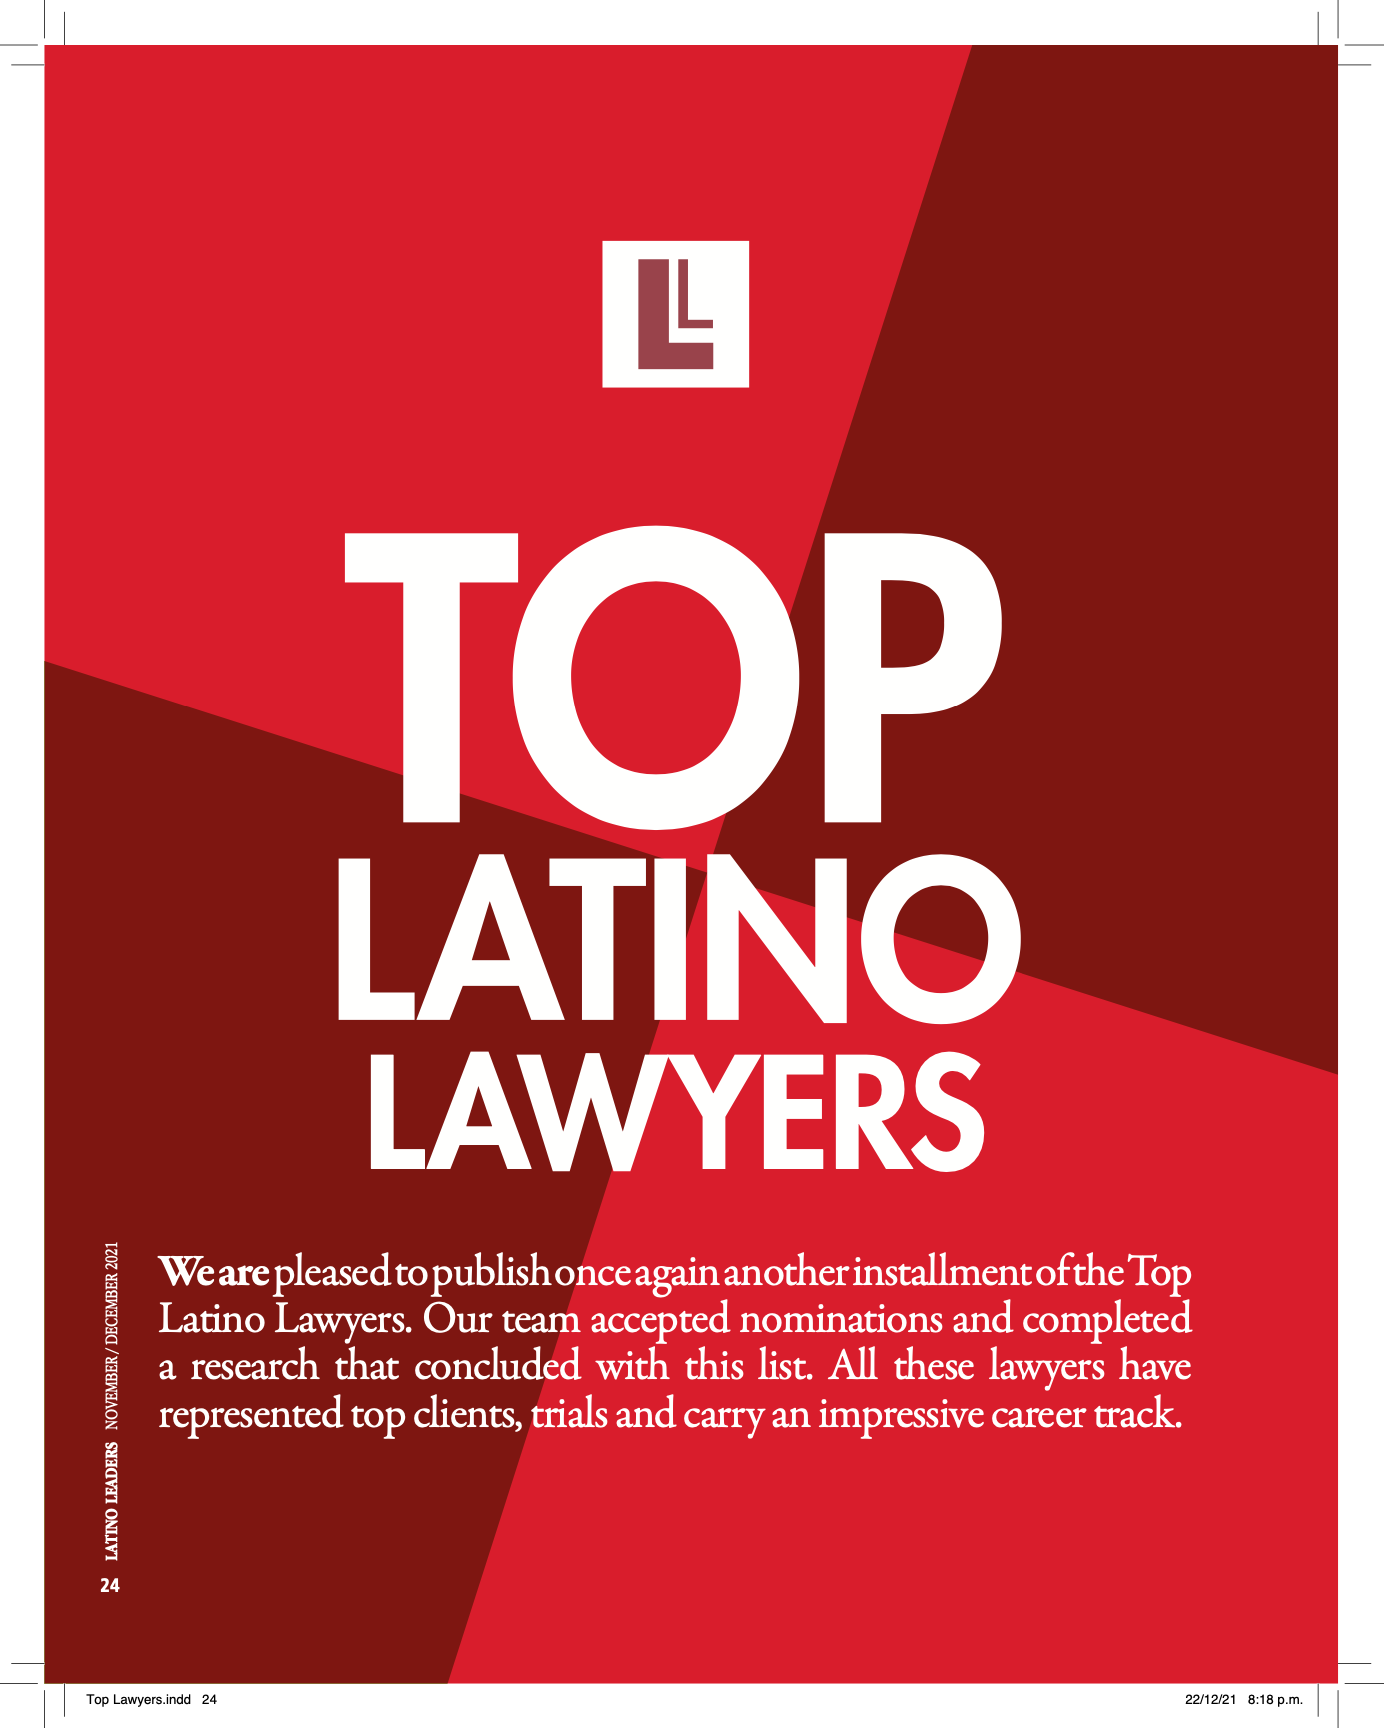 Latino Leaders Magazine recognizes Top Latino Lawyers